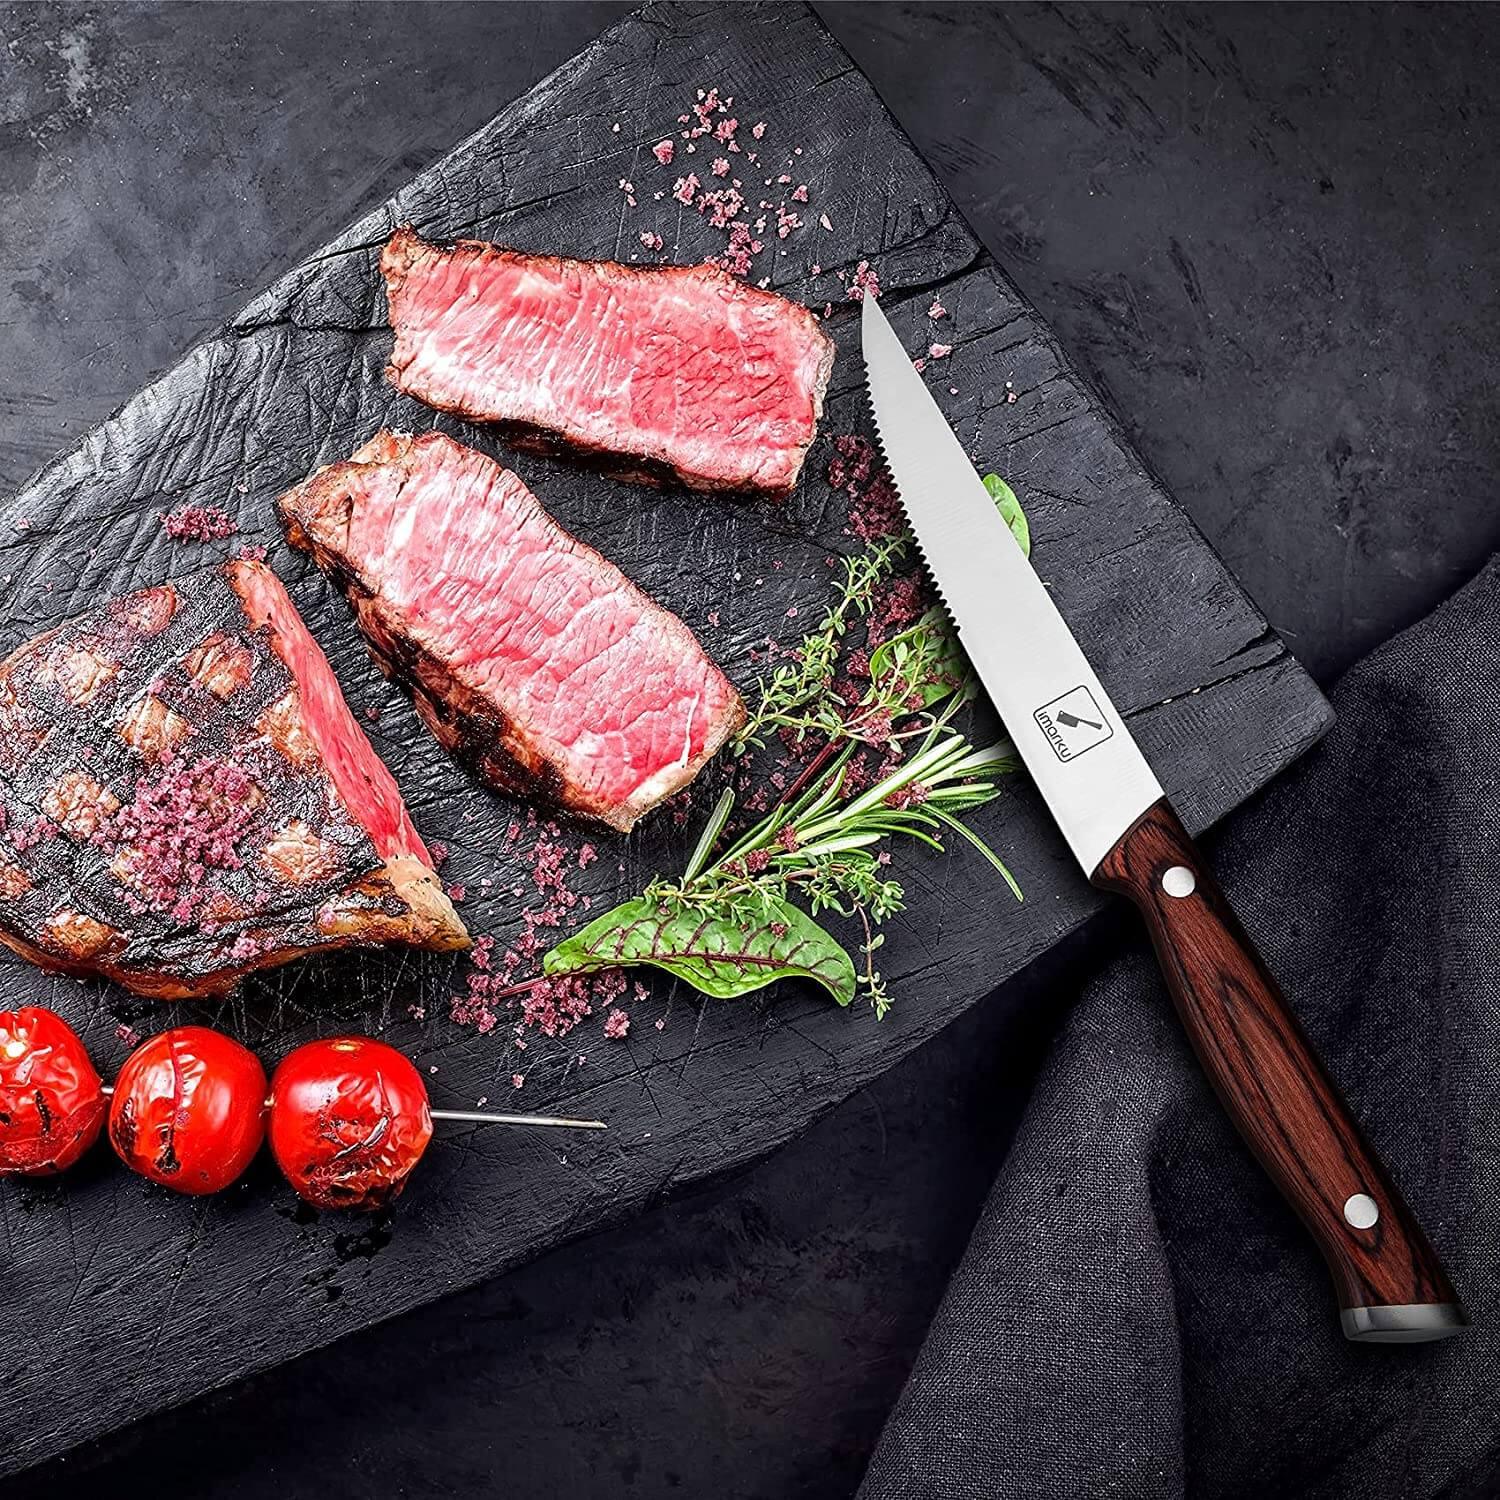 Rosewood Steak Knife Set